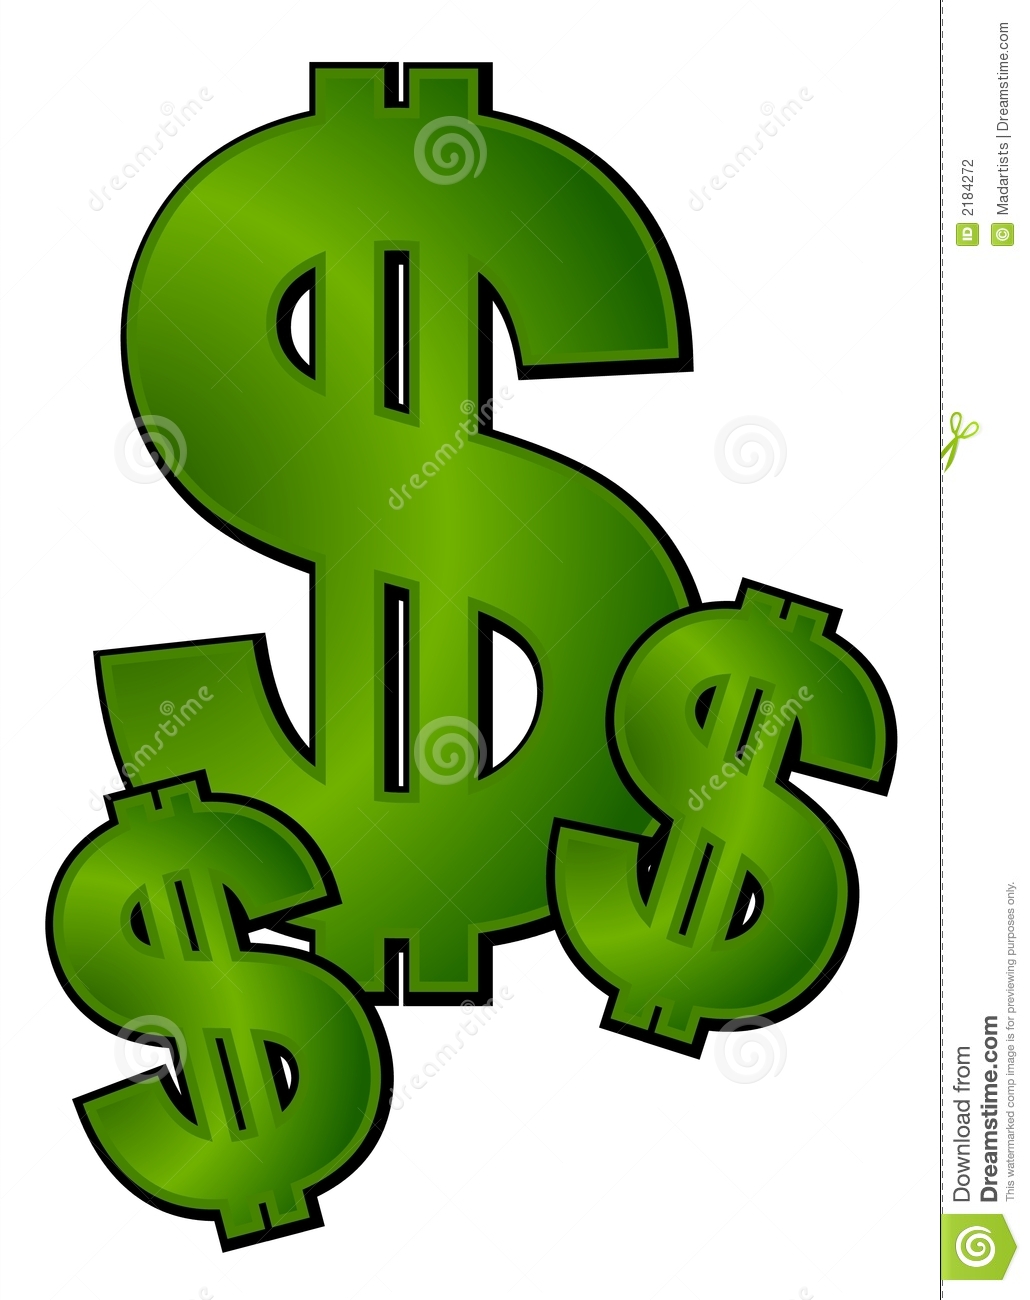 Dollar signs money clip art stock photography image 2